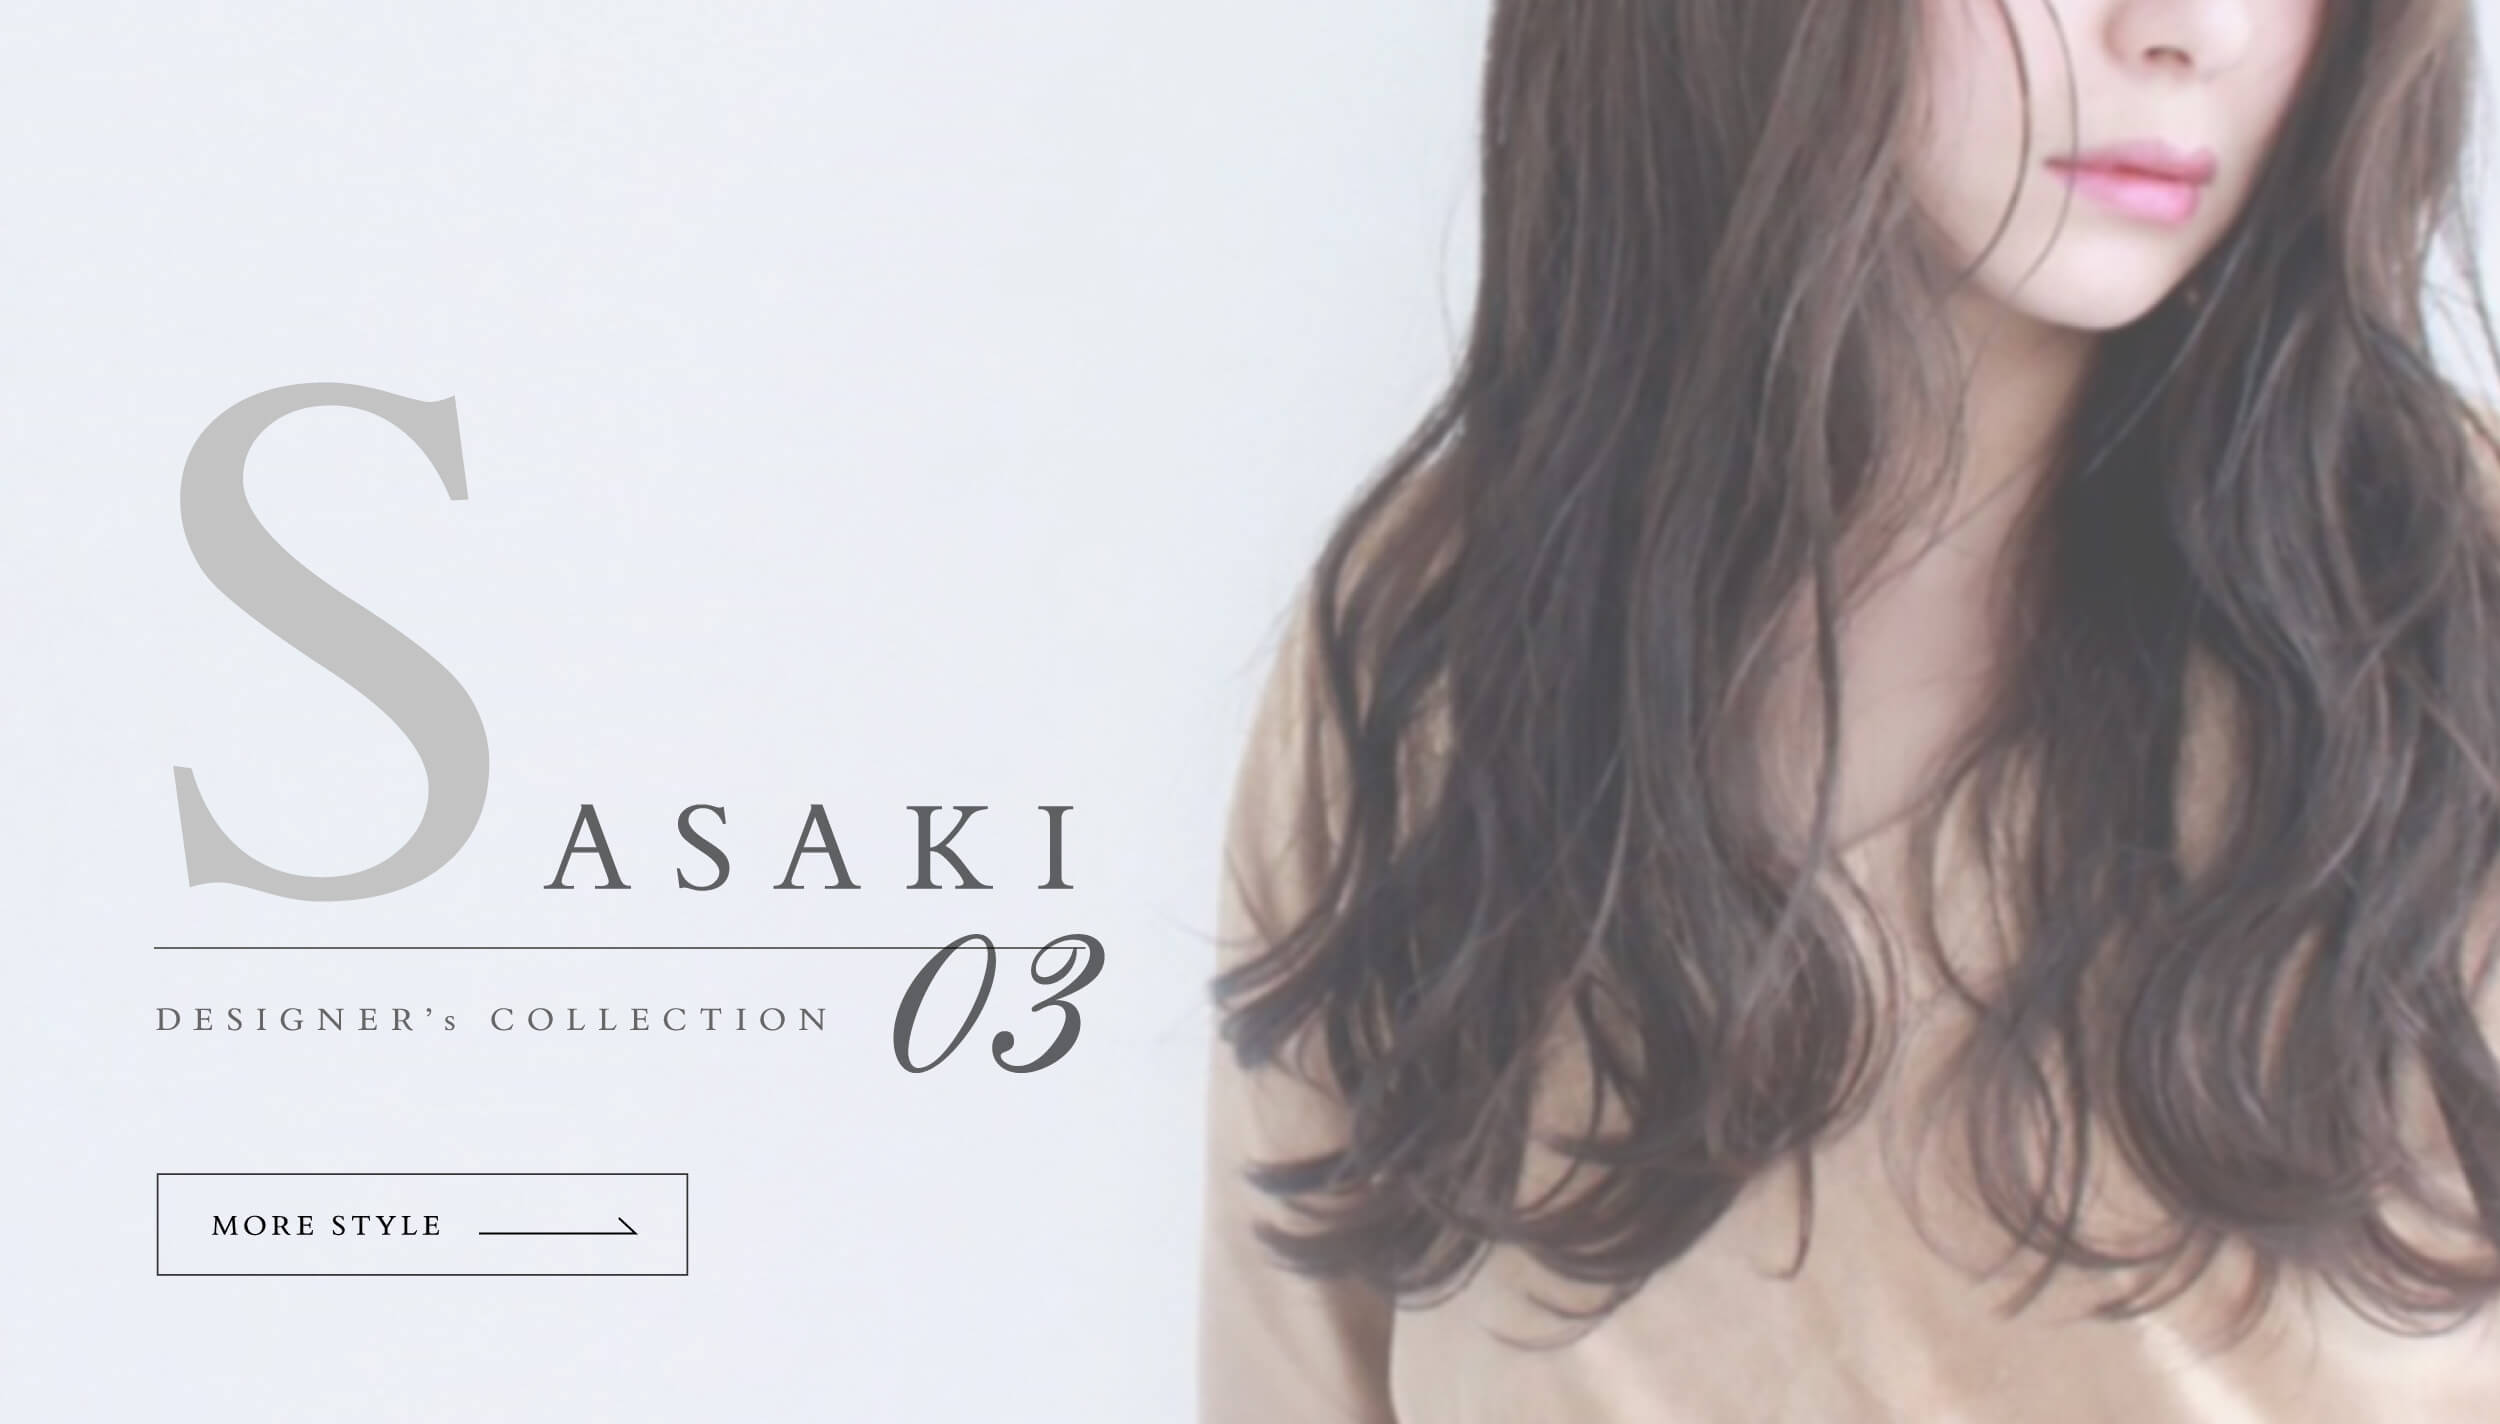 Designer's collection 03 SASAKI